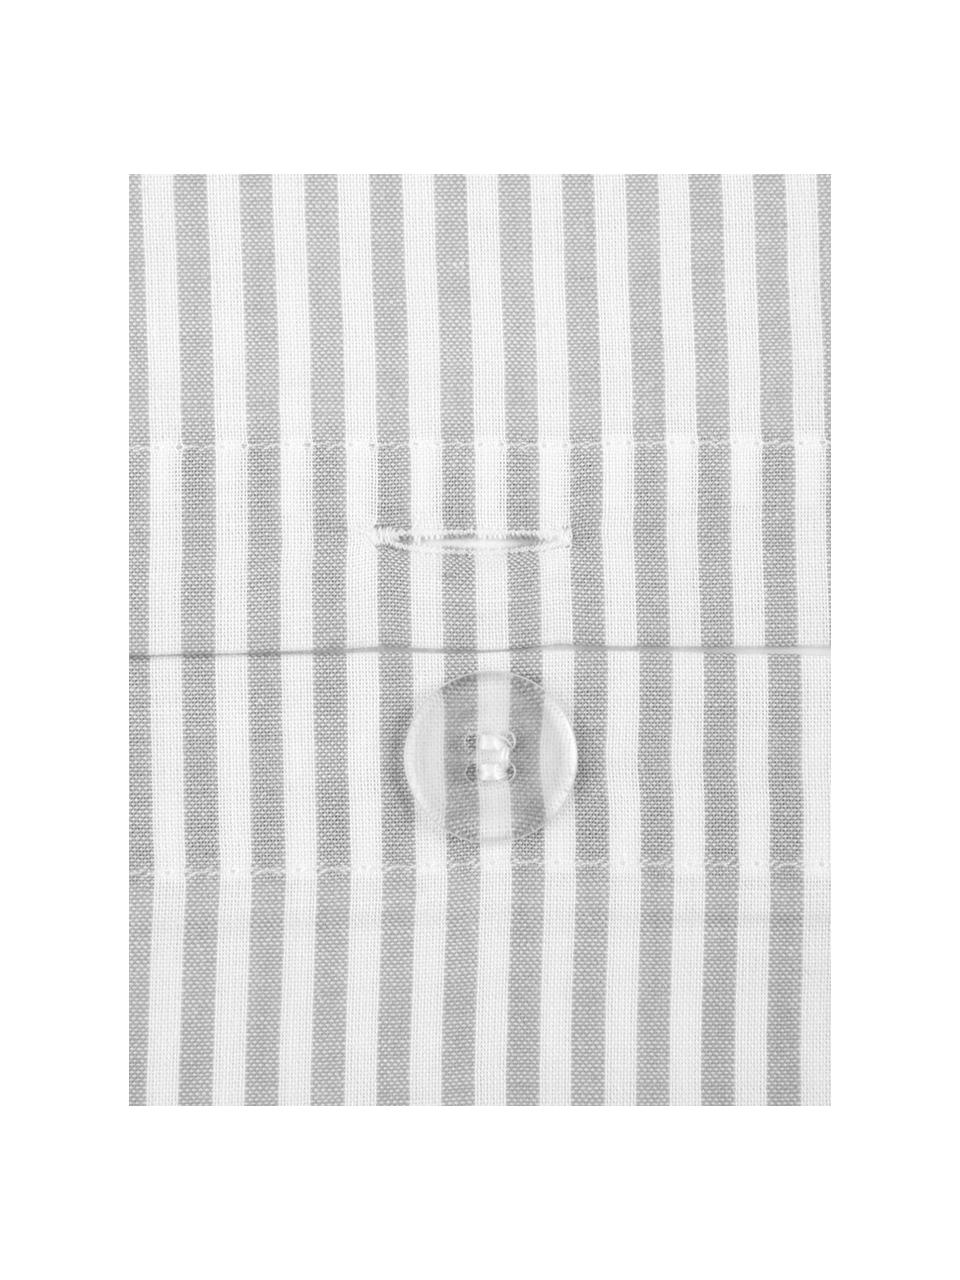 Parure copripiumino in cotone ranforce Ellie, Tessuto: Renforcé, Bianco, grigio, 200 x 200 cm + 2 federe 50 x 80 cm